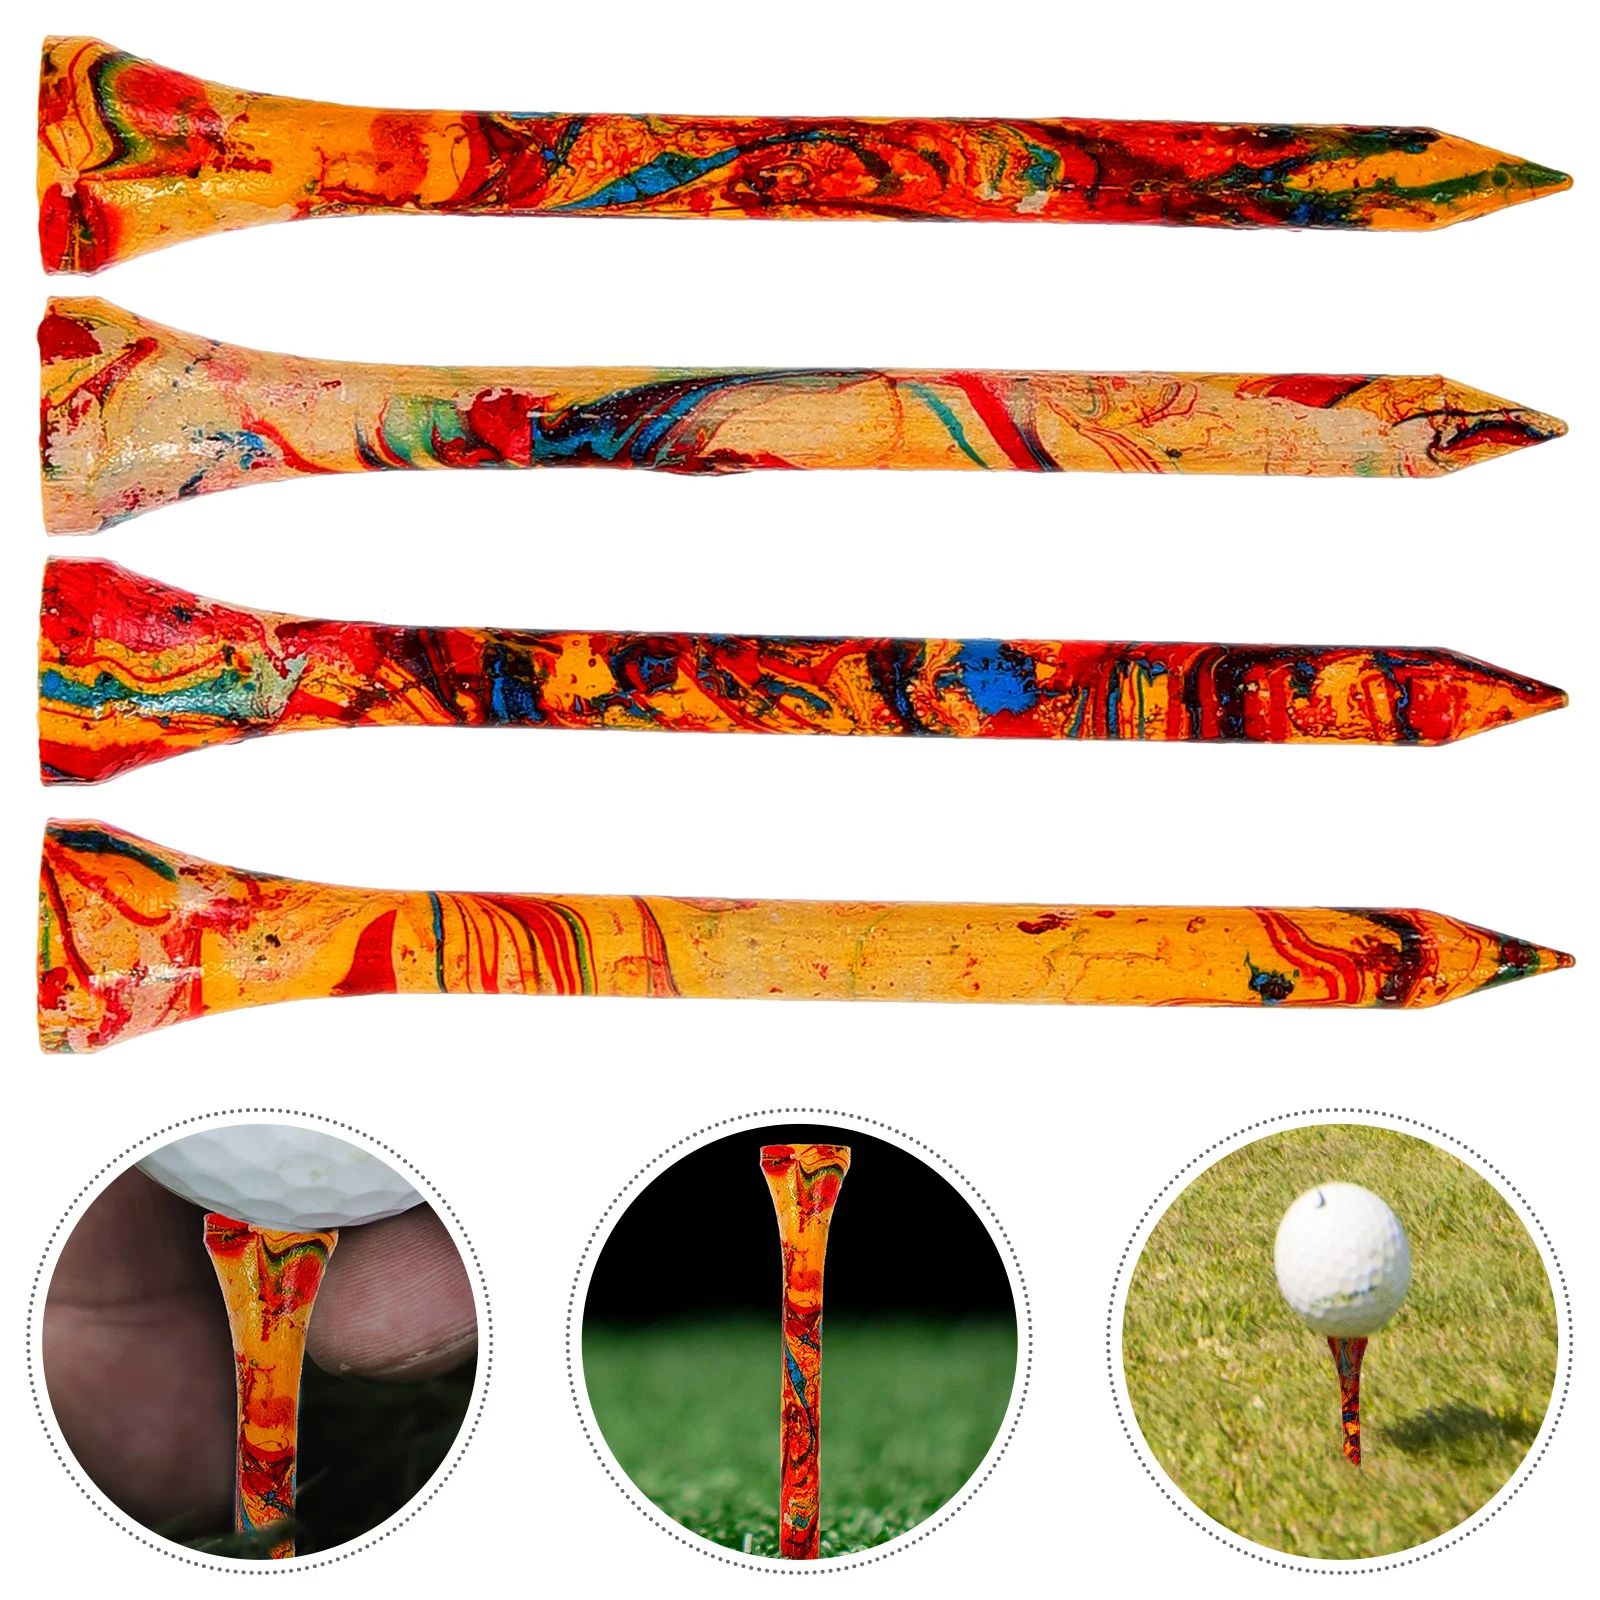 

50 Pcs Golfing Accessories Western Tees Balls Wear-resist Lotus Tree Stands Sturdy